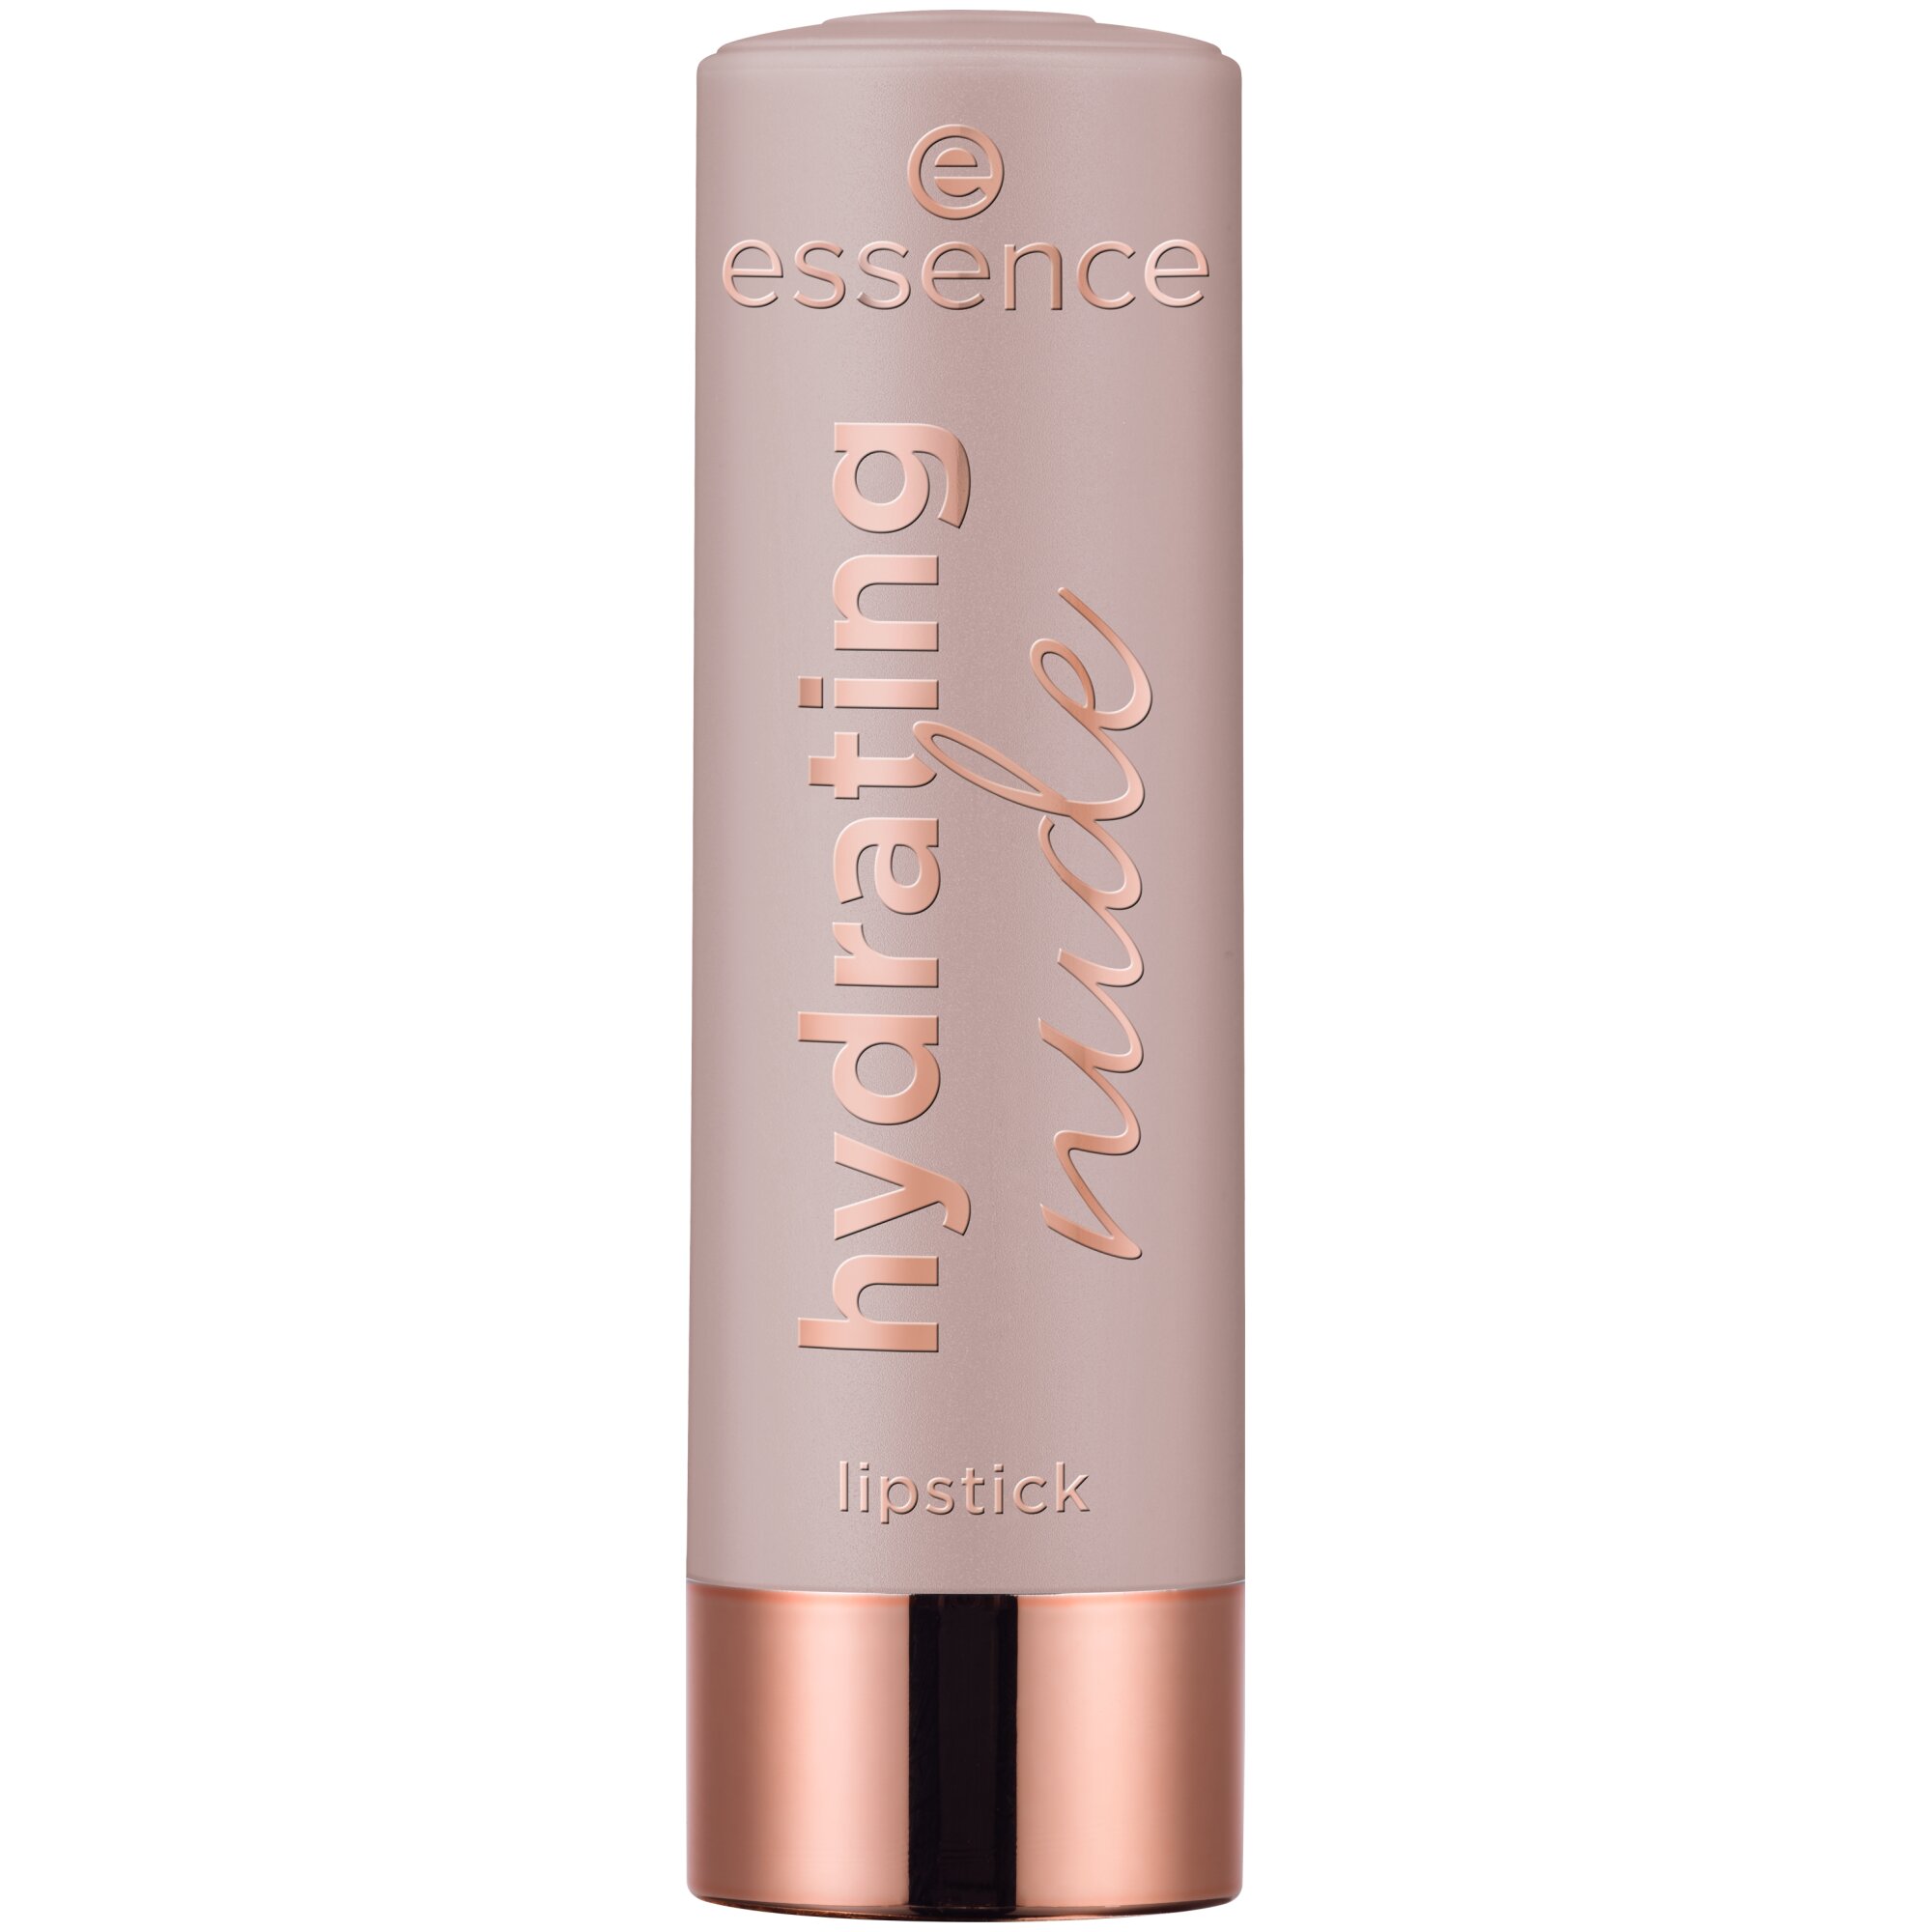 Ruj hidratant Hydrating Nude Lipstick, 301 - Romantic, 3.5 g, Essence